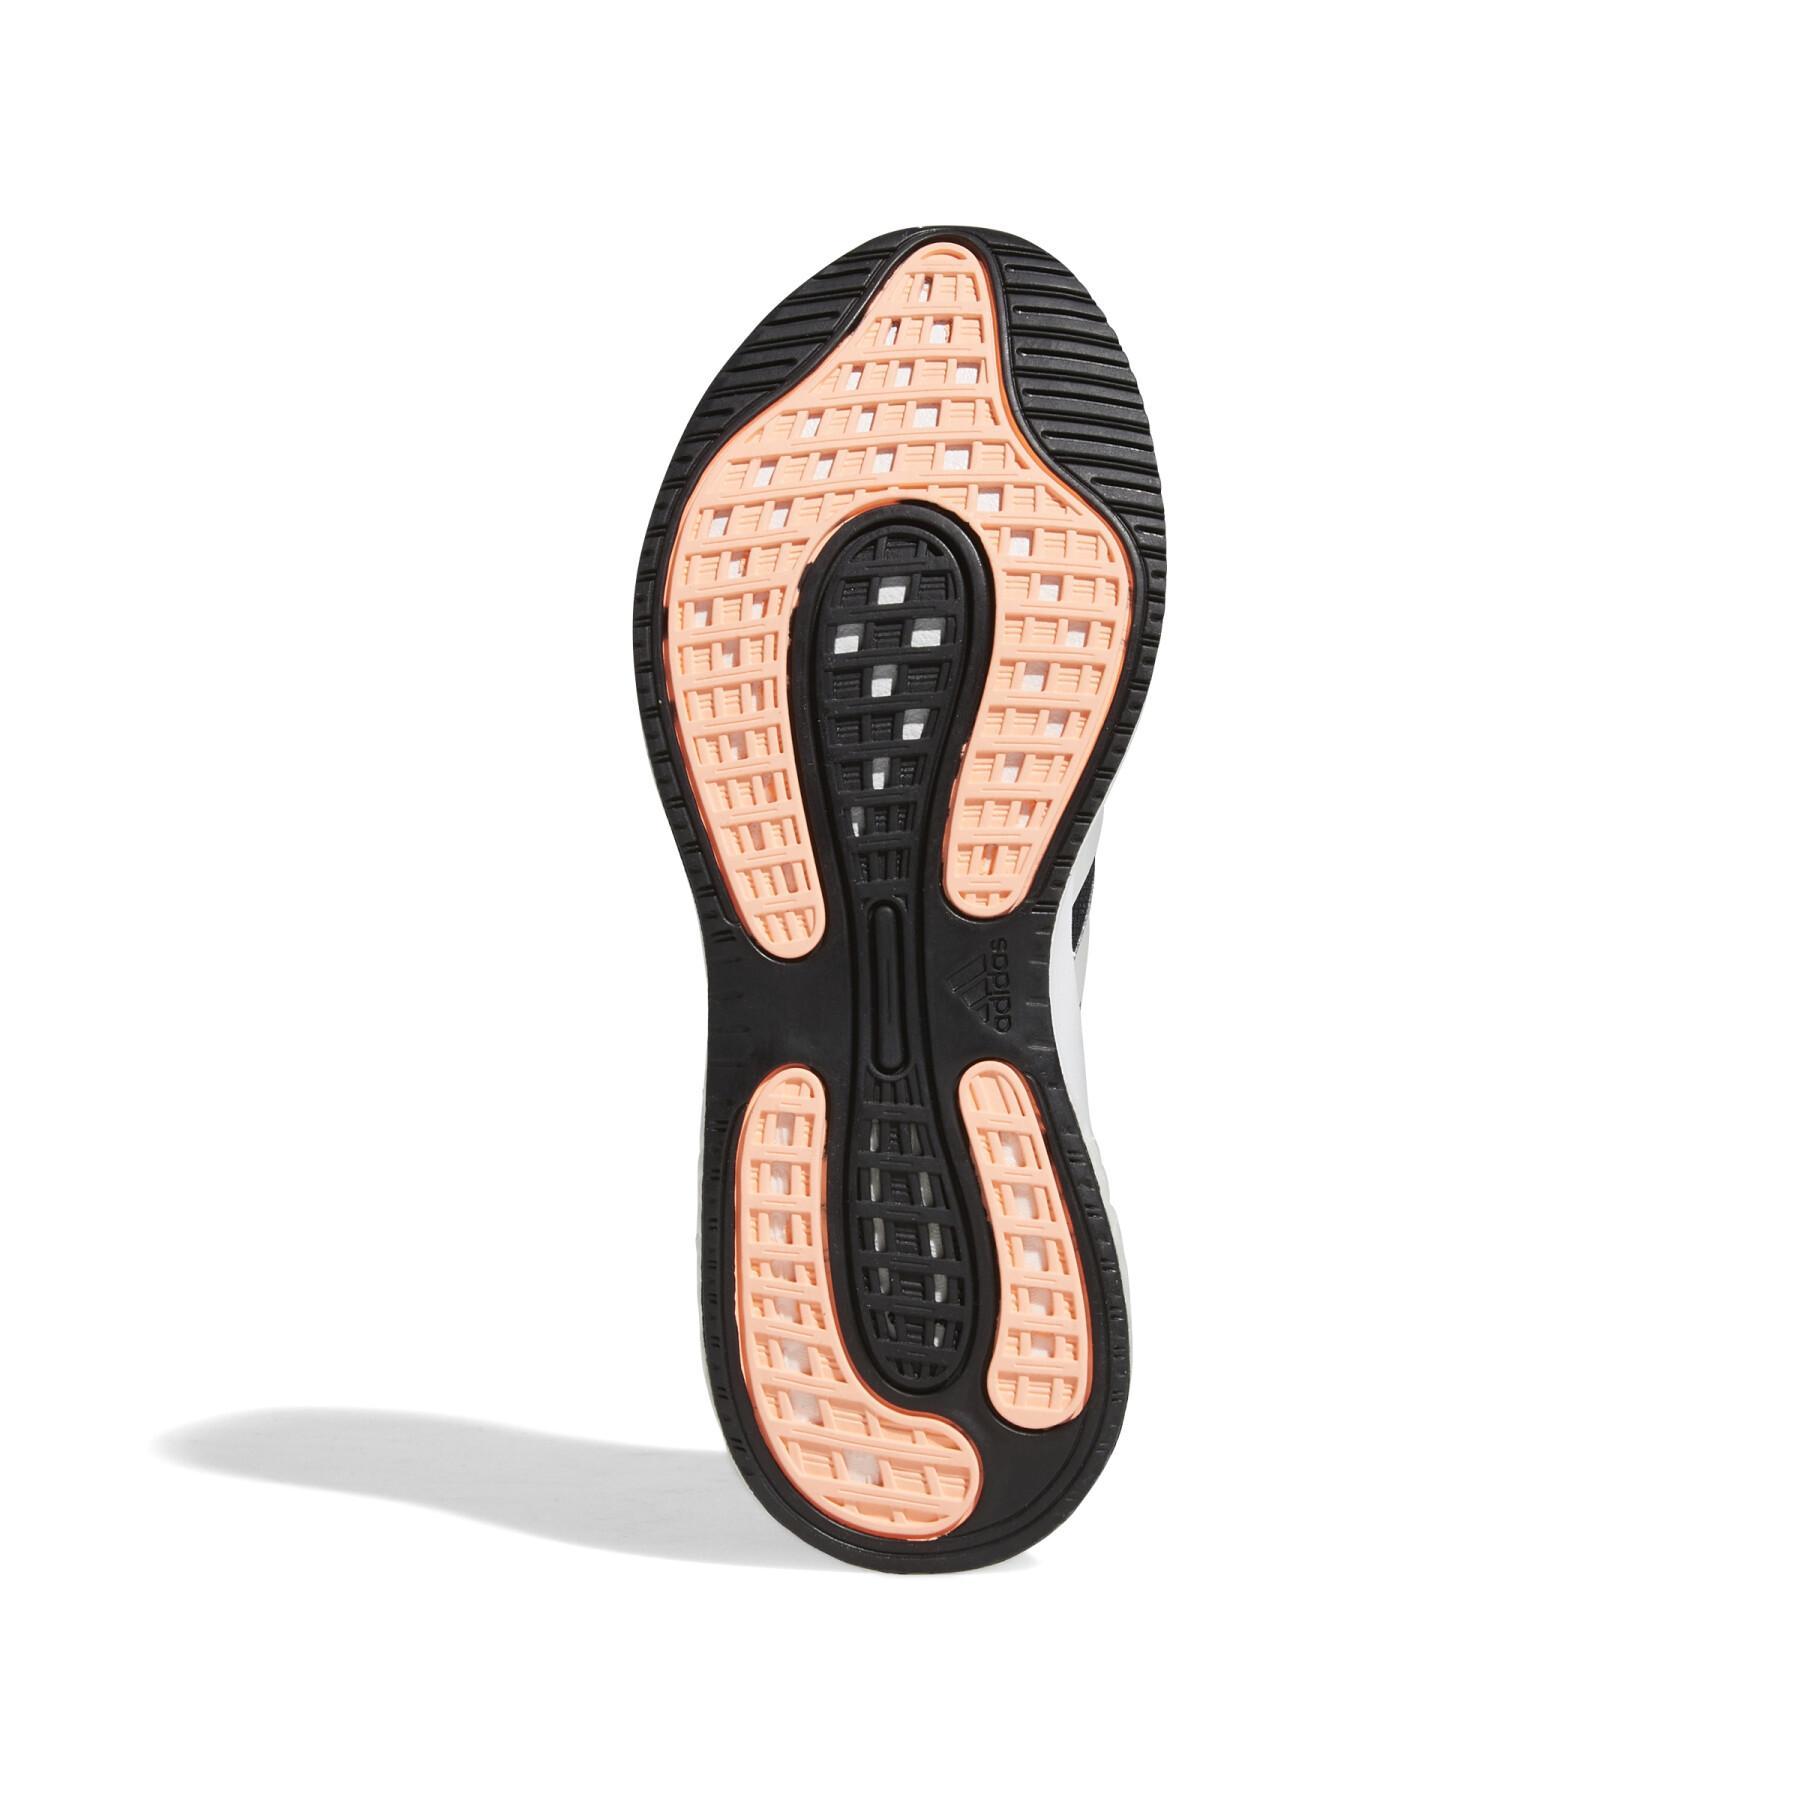 Buty do biegania dla kobiet adidas Supernova+